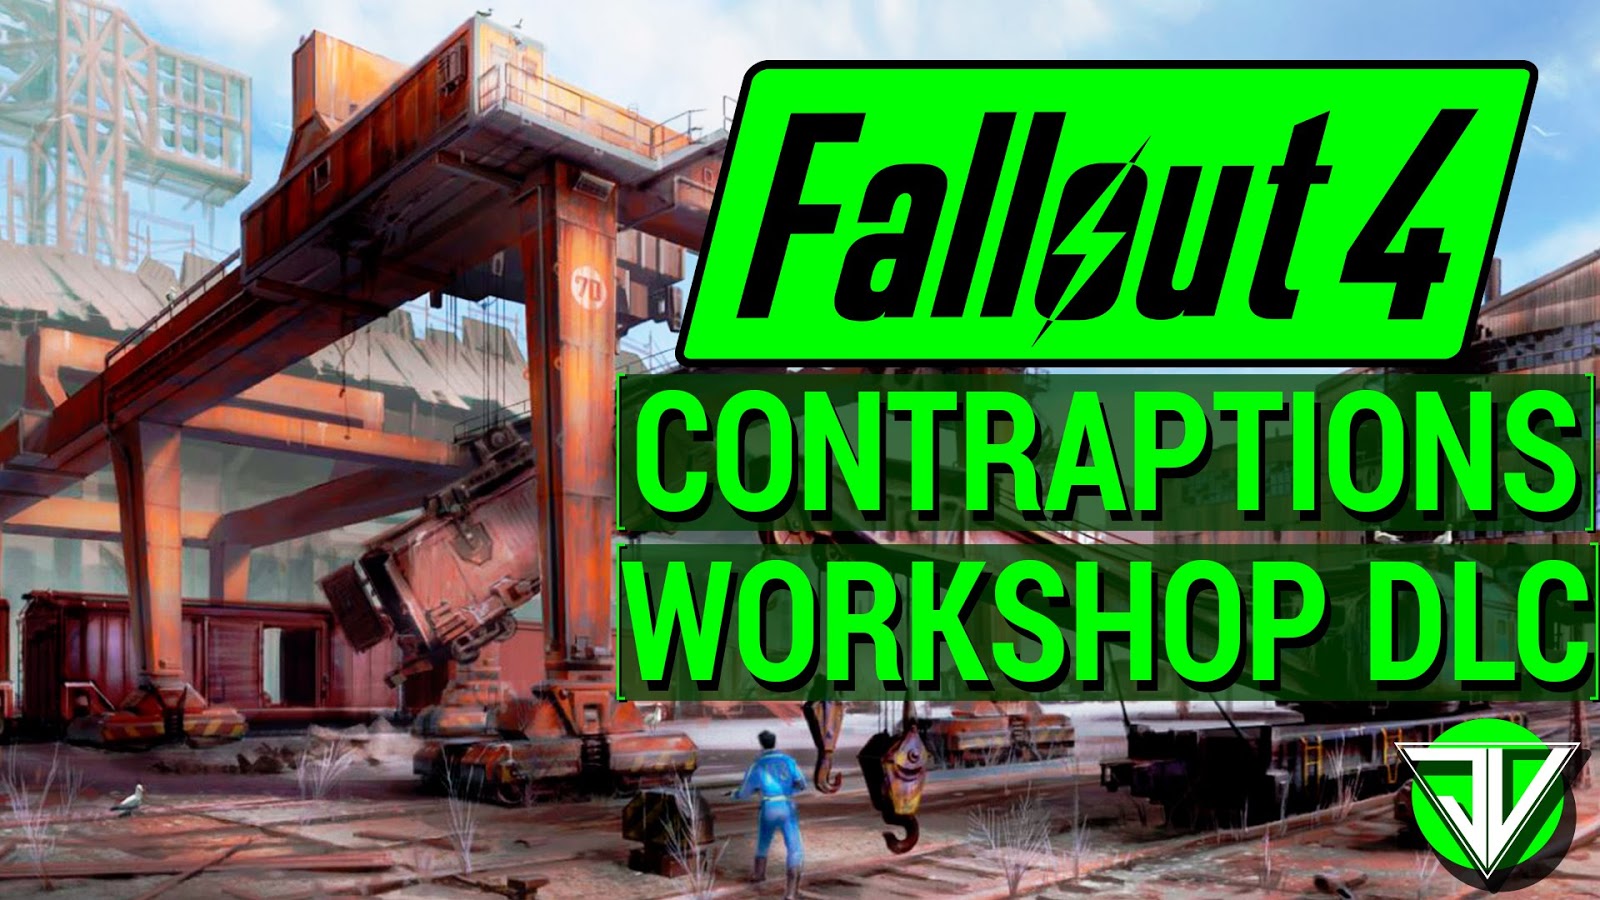 Contraptions workshop для fallout 4 фото 33